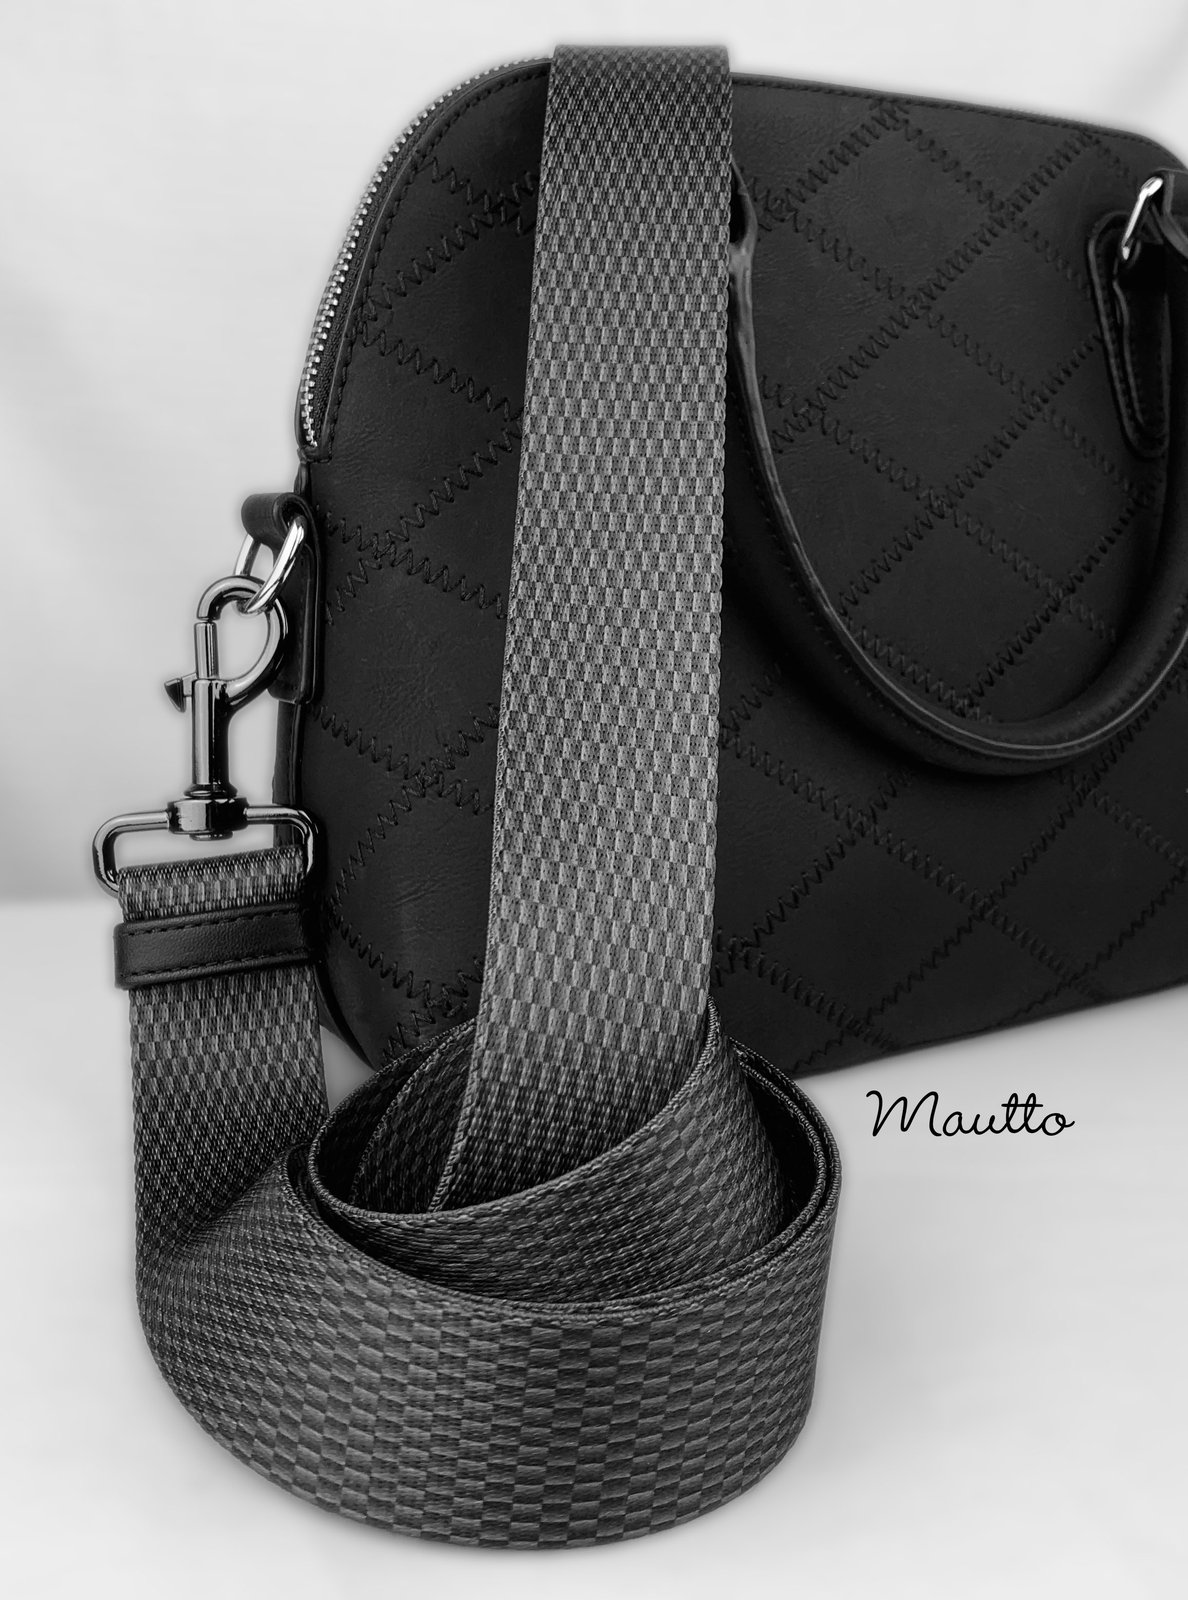 carbon fiber pattern design handbag purse strap adjustable swiveling clips mautto